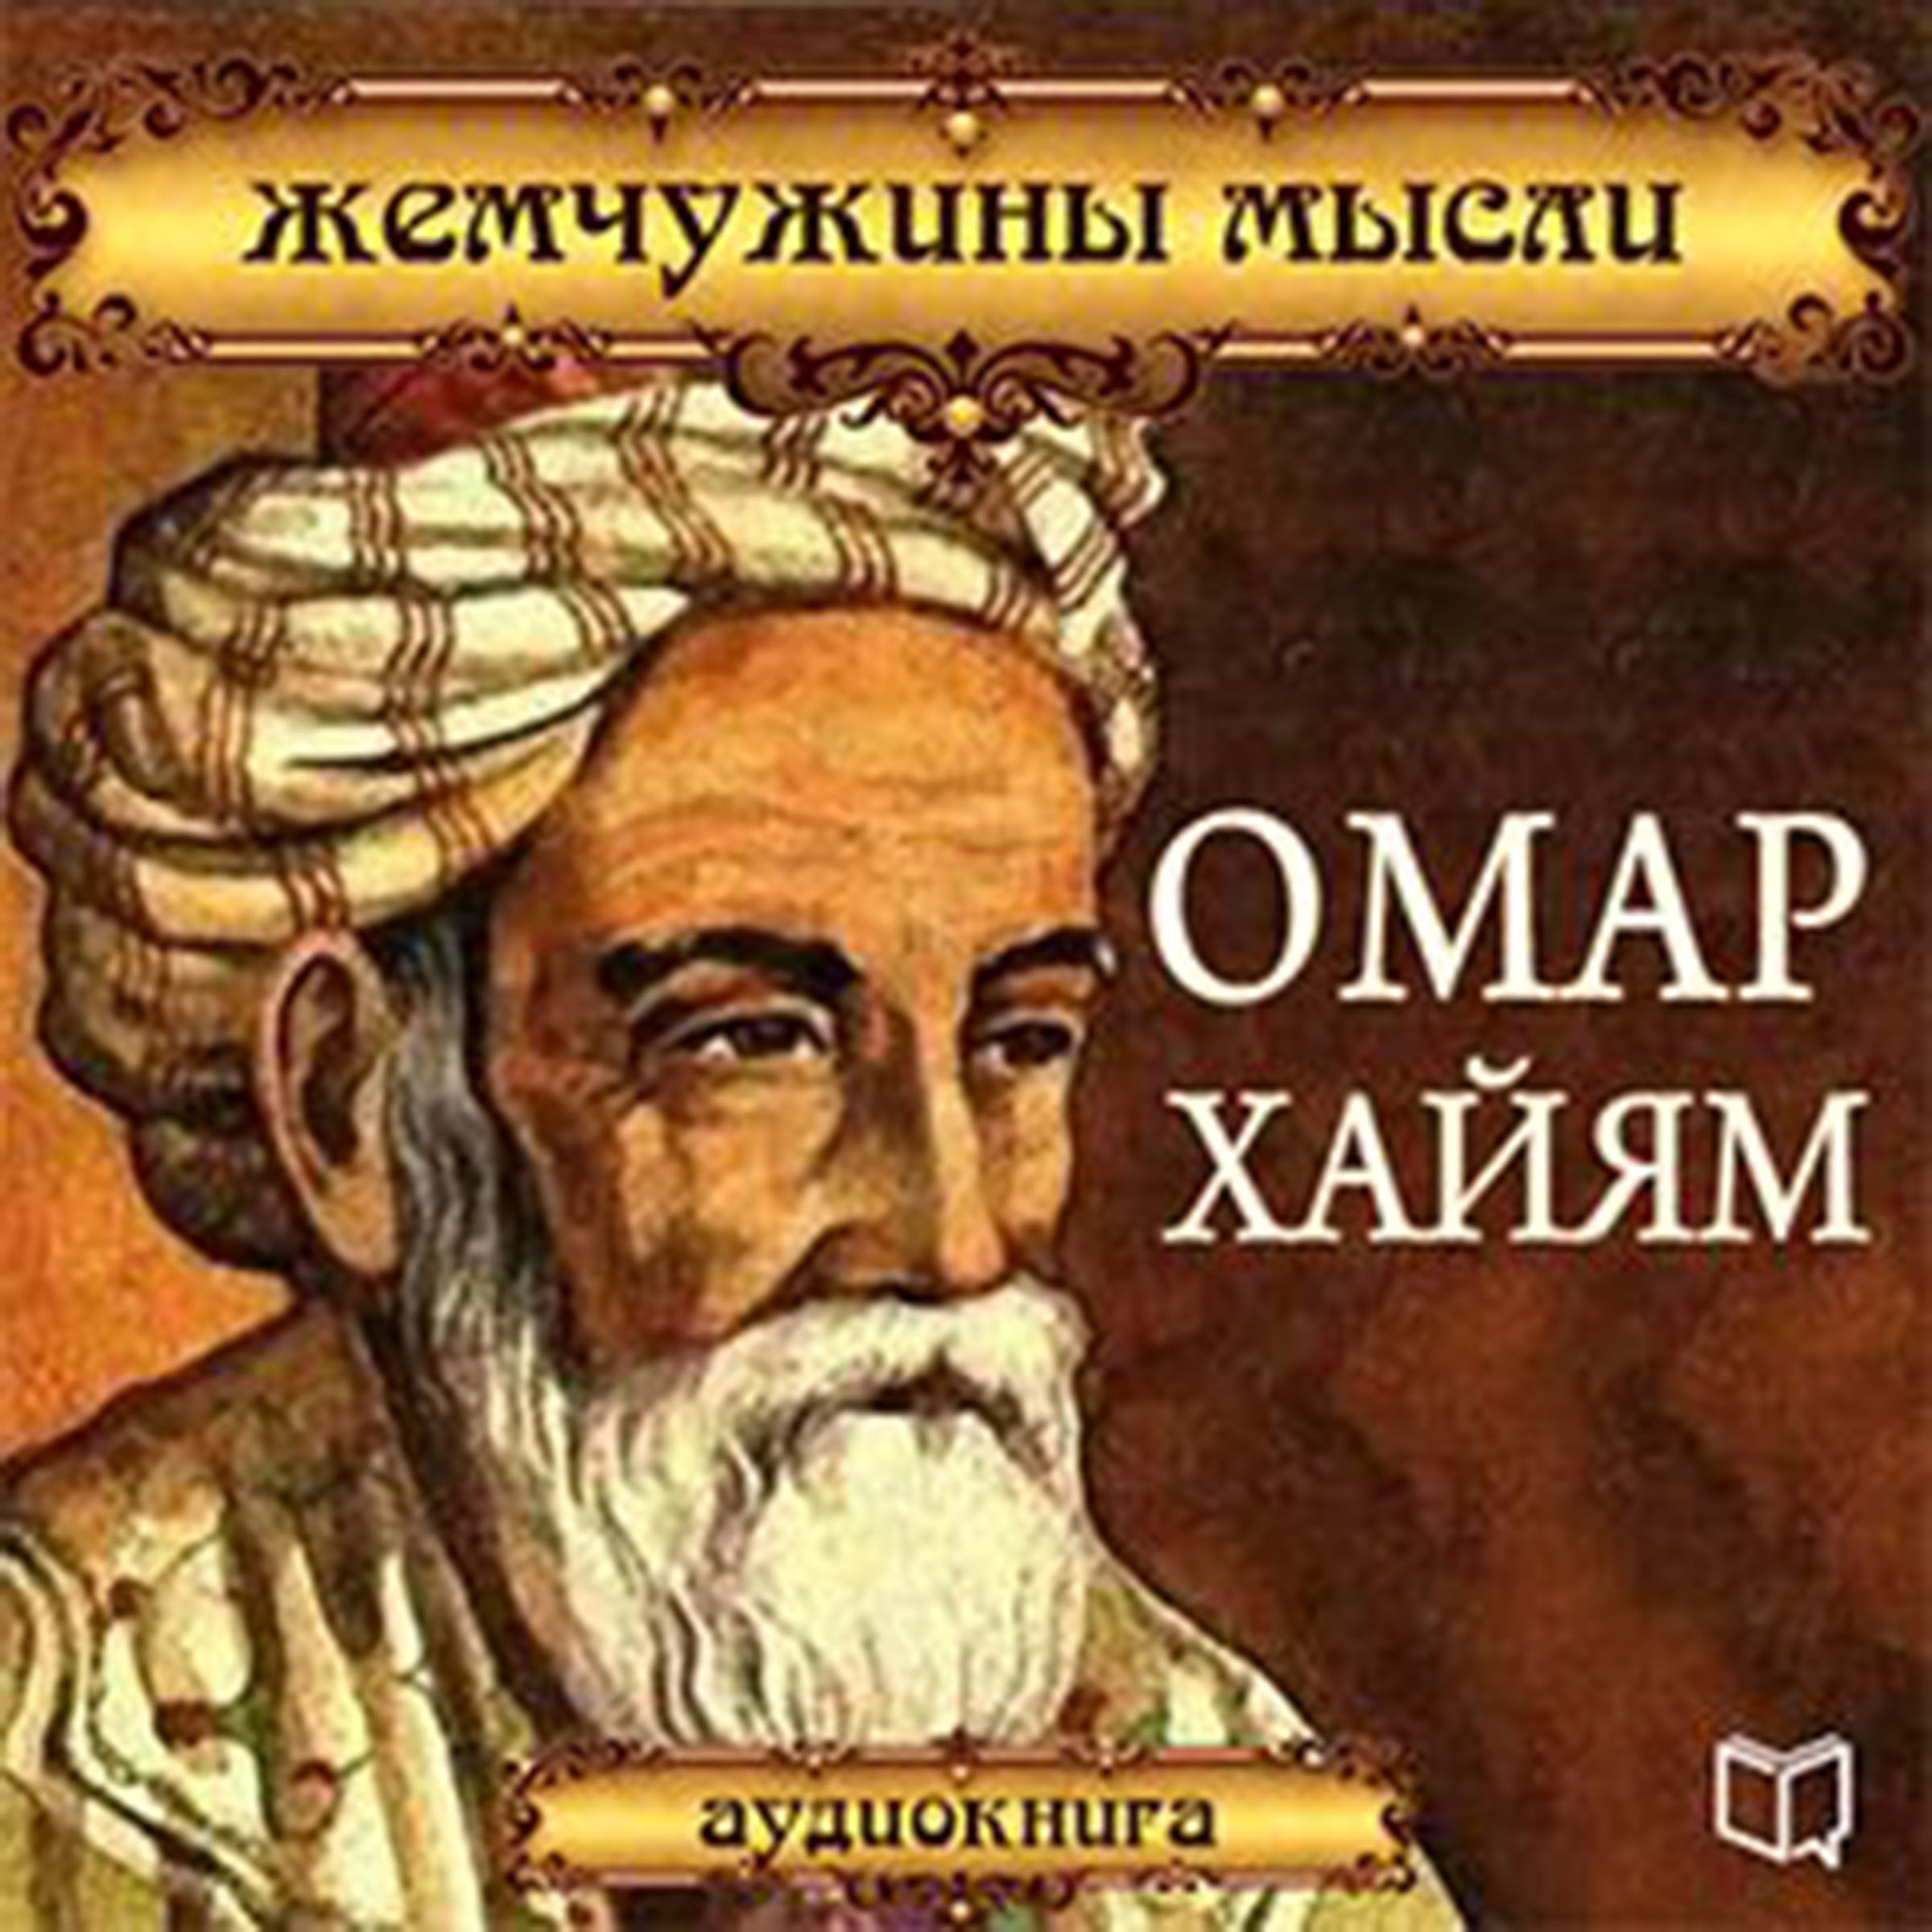 Omar khayyam